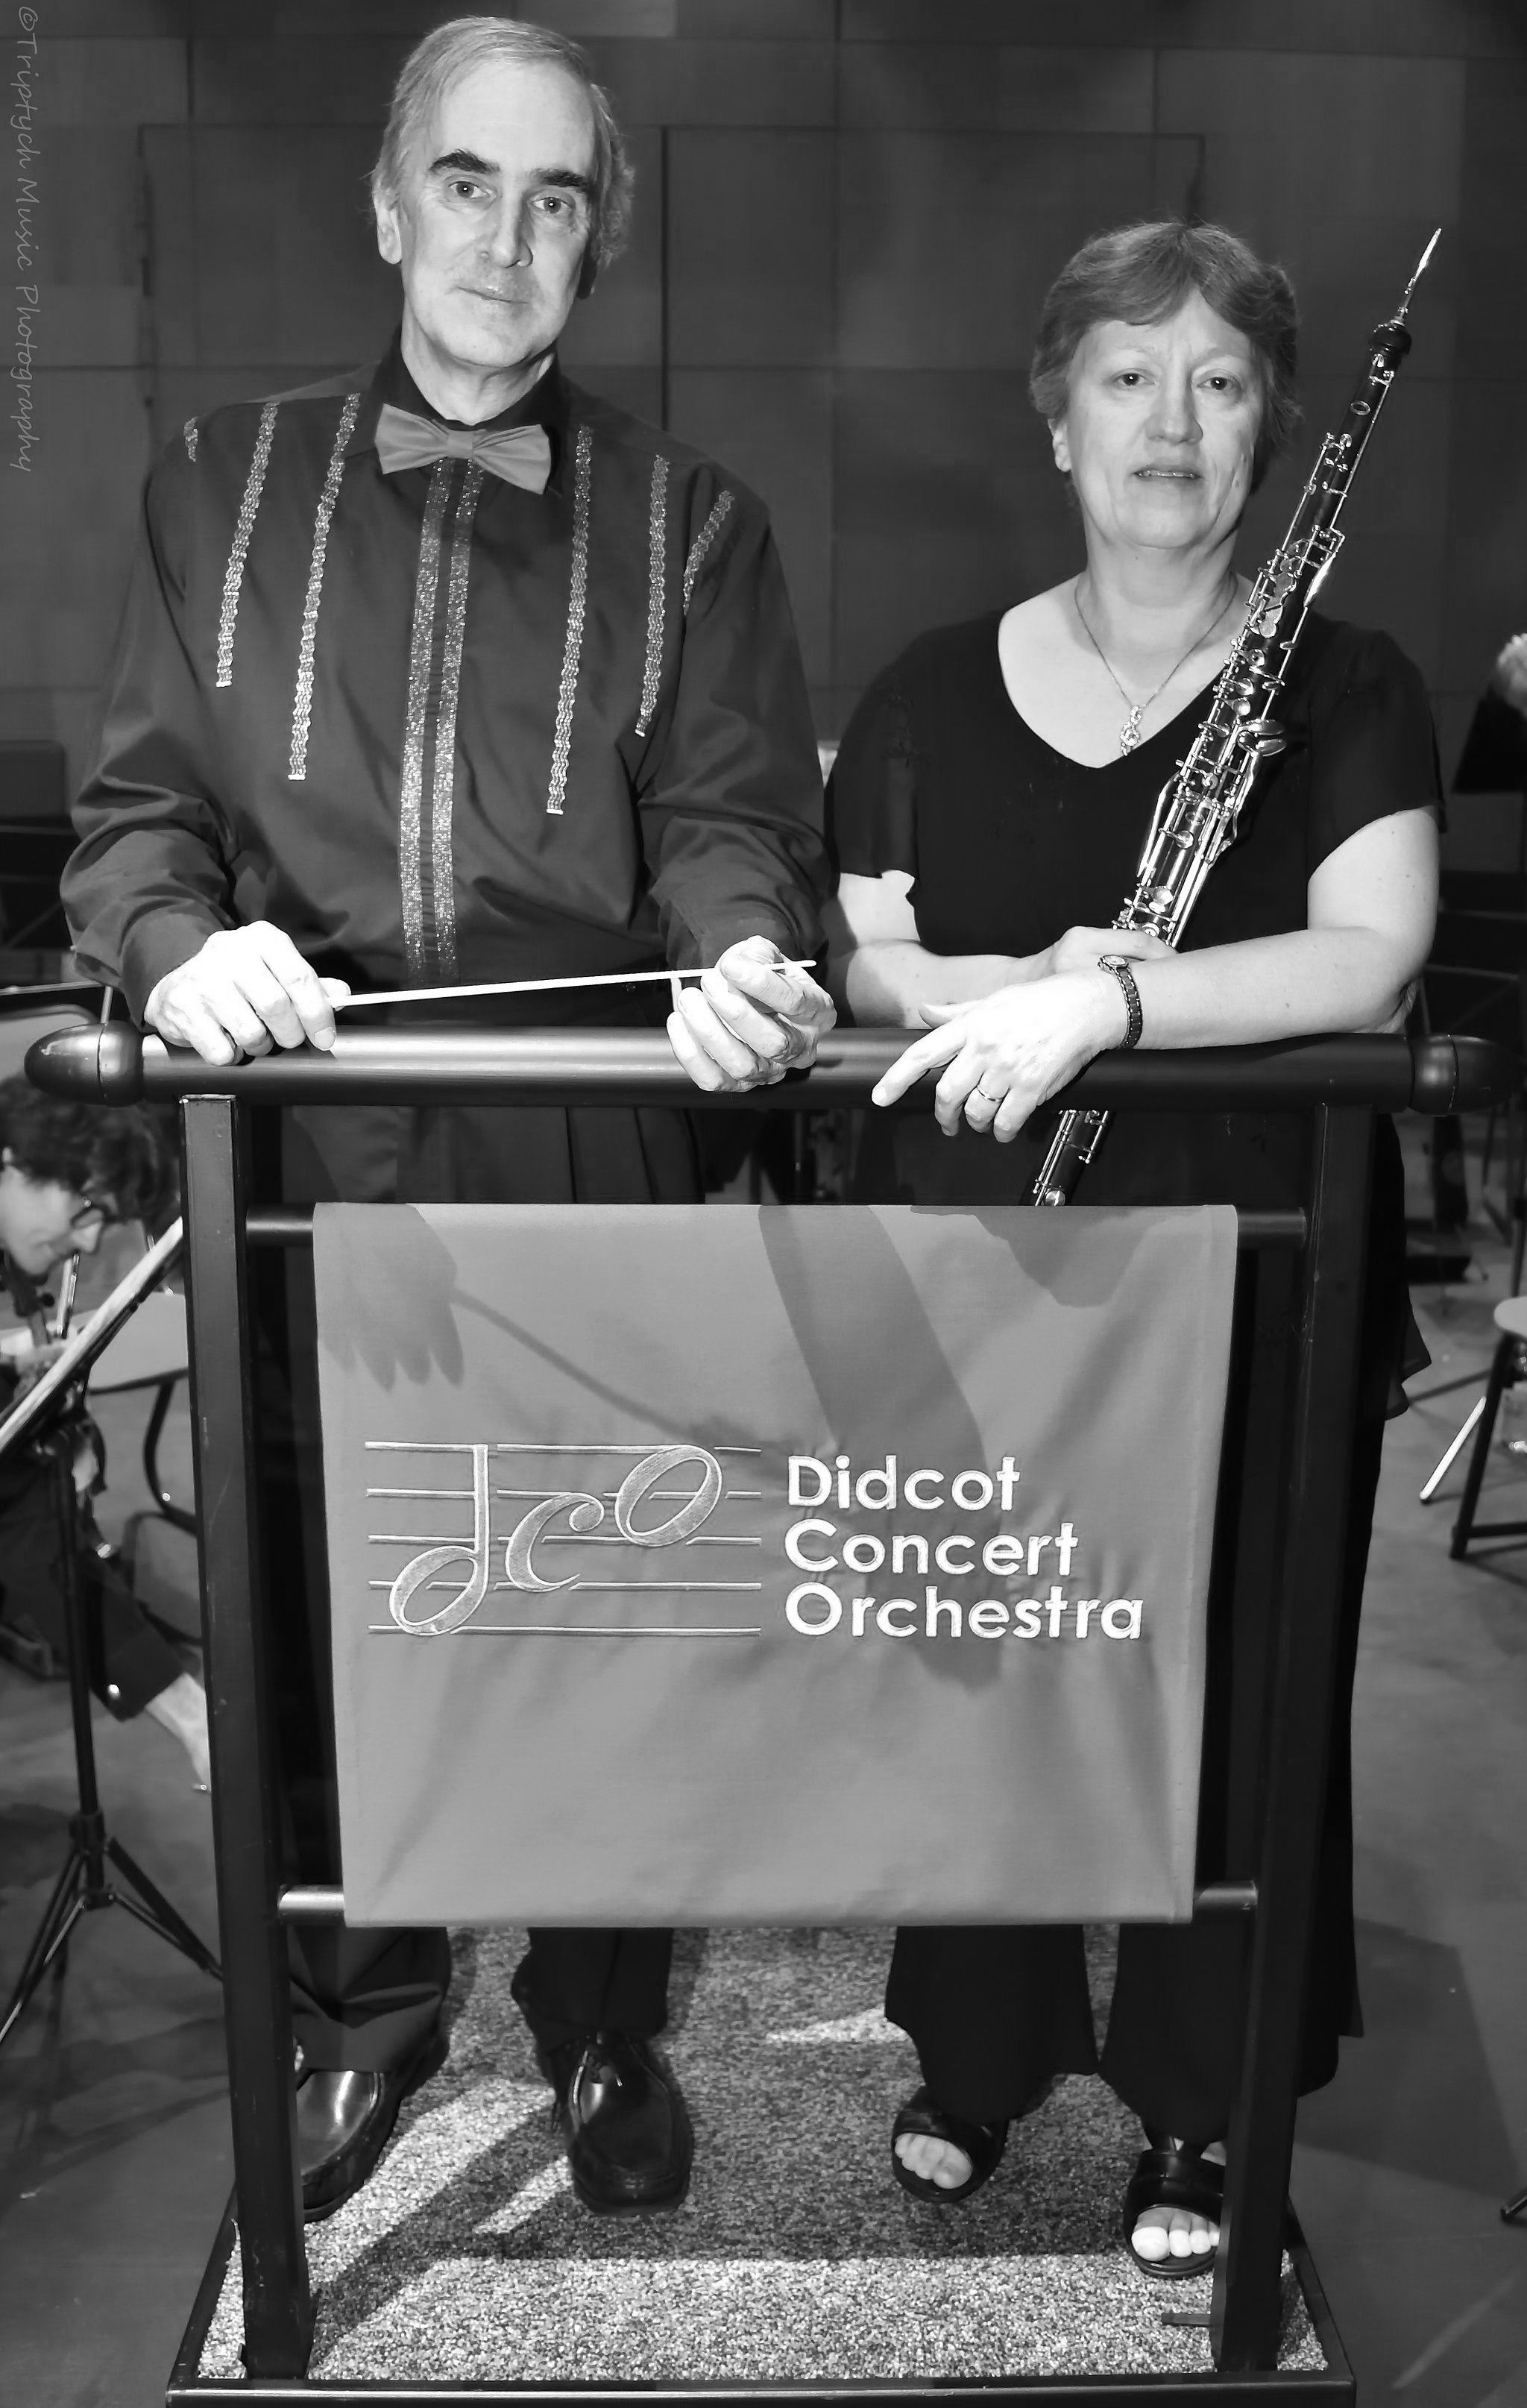 Didcot Concert Orchestra seeks sponsors